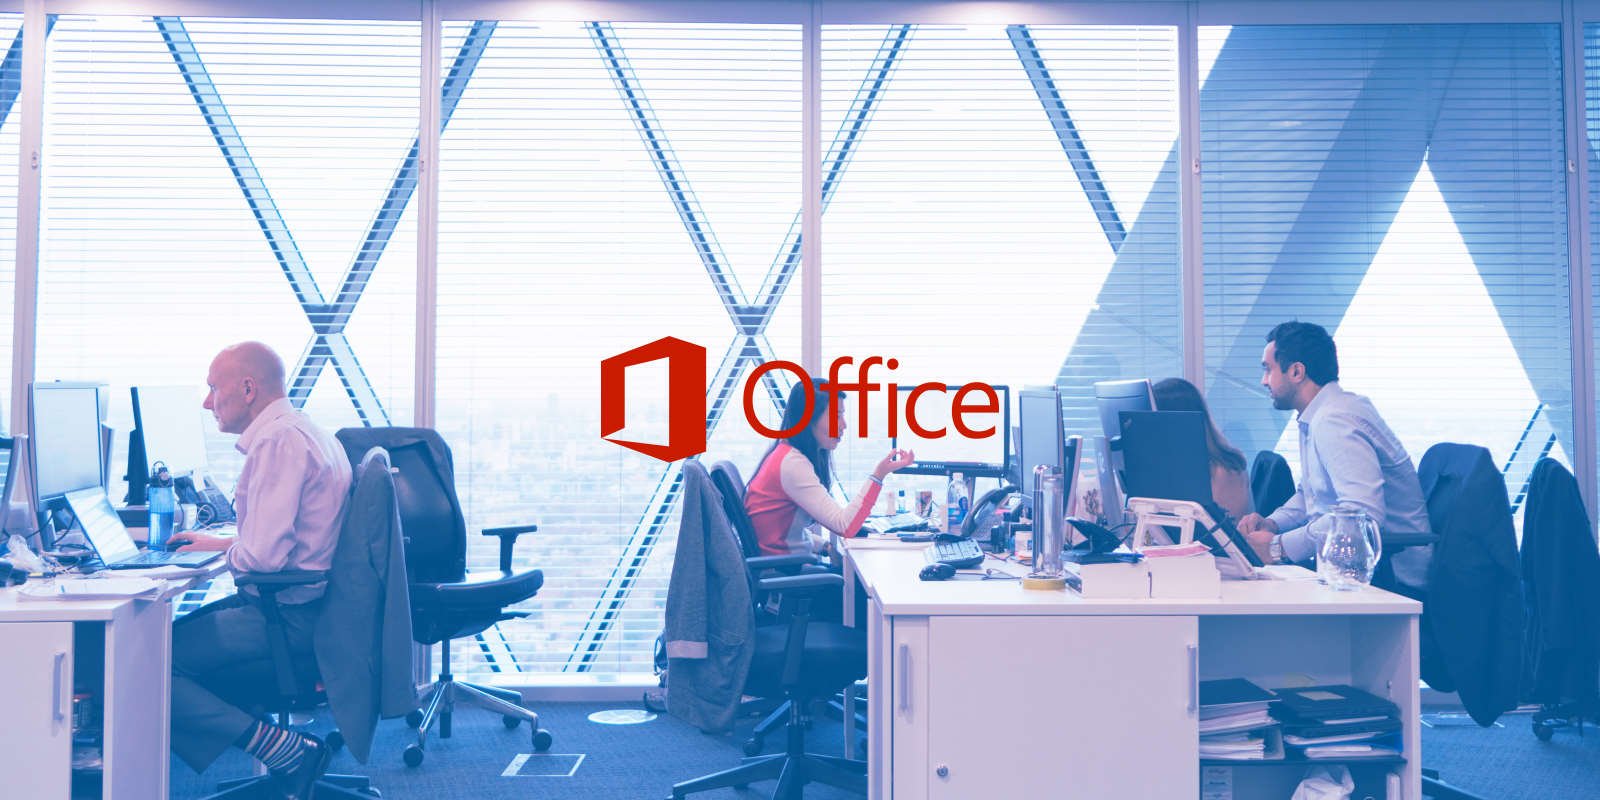 Microsoft Office November 2020 updates fix Outlook, Skype issues